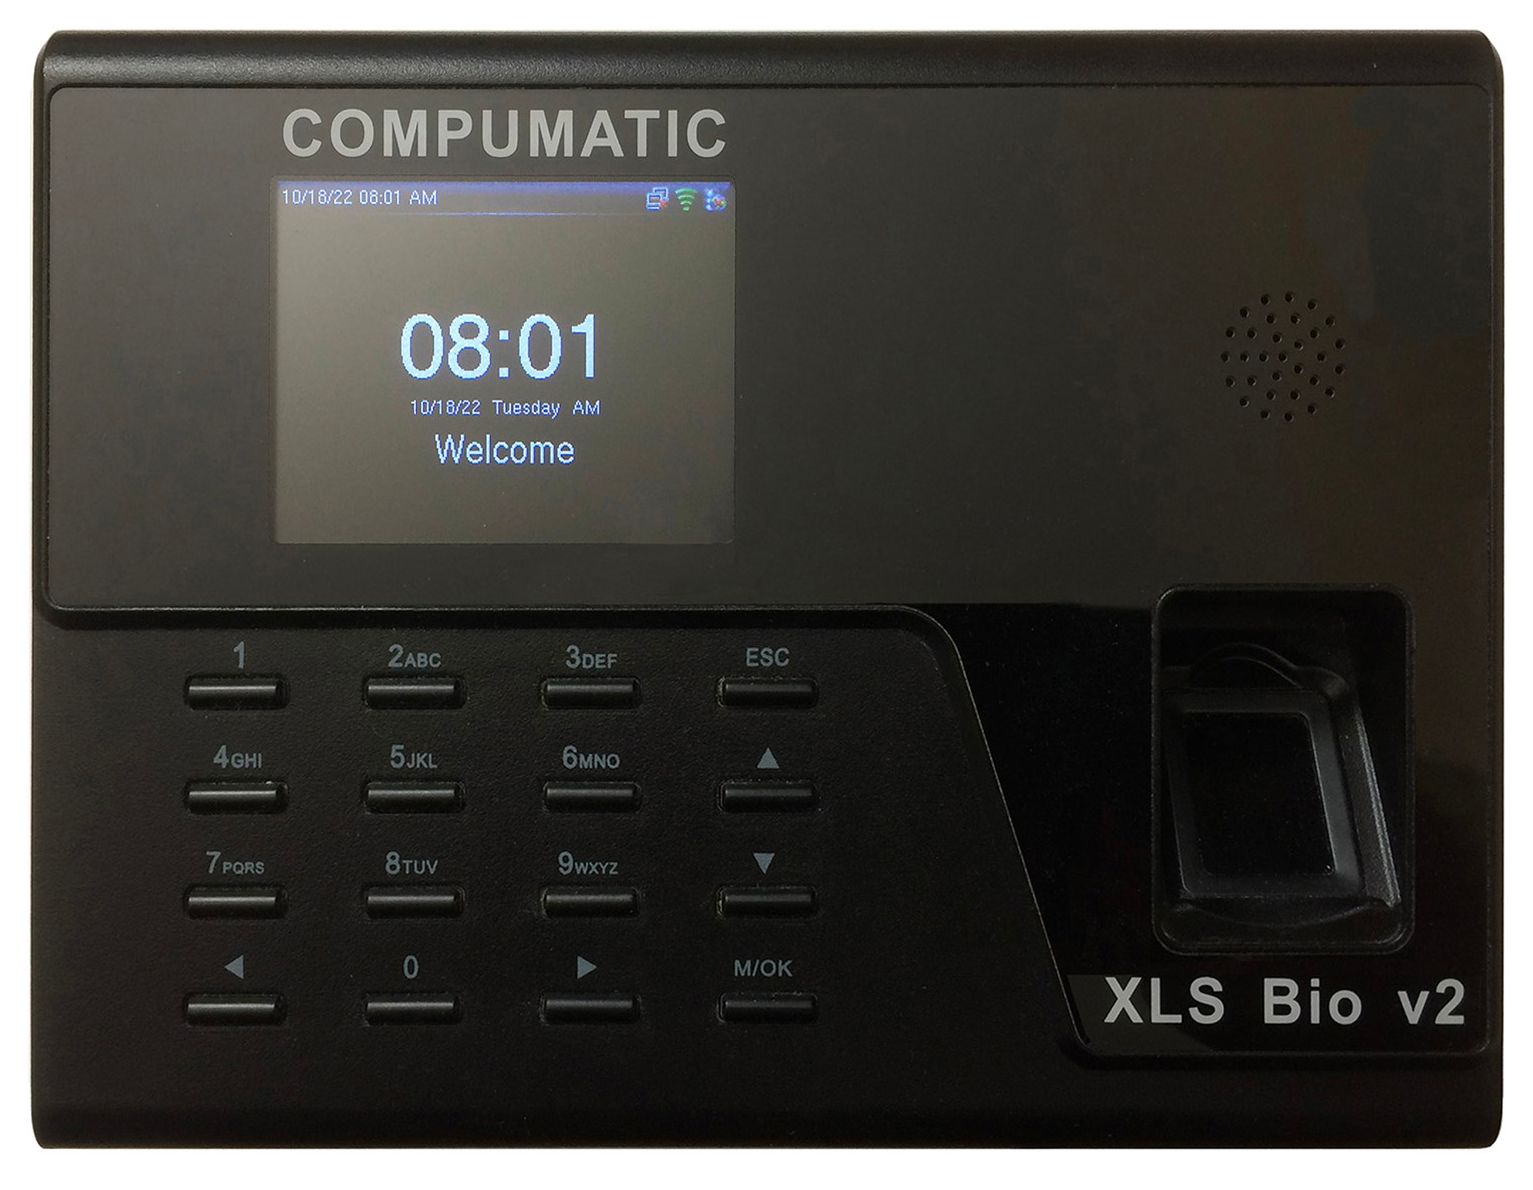 Compumatic XLSBIO Fingerprint Time Clock System